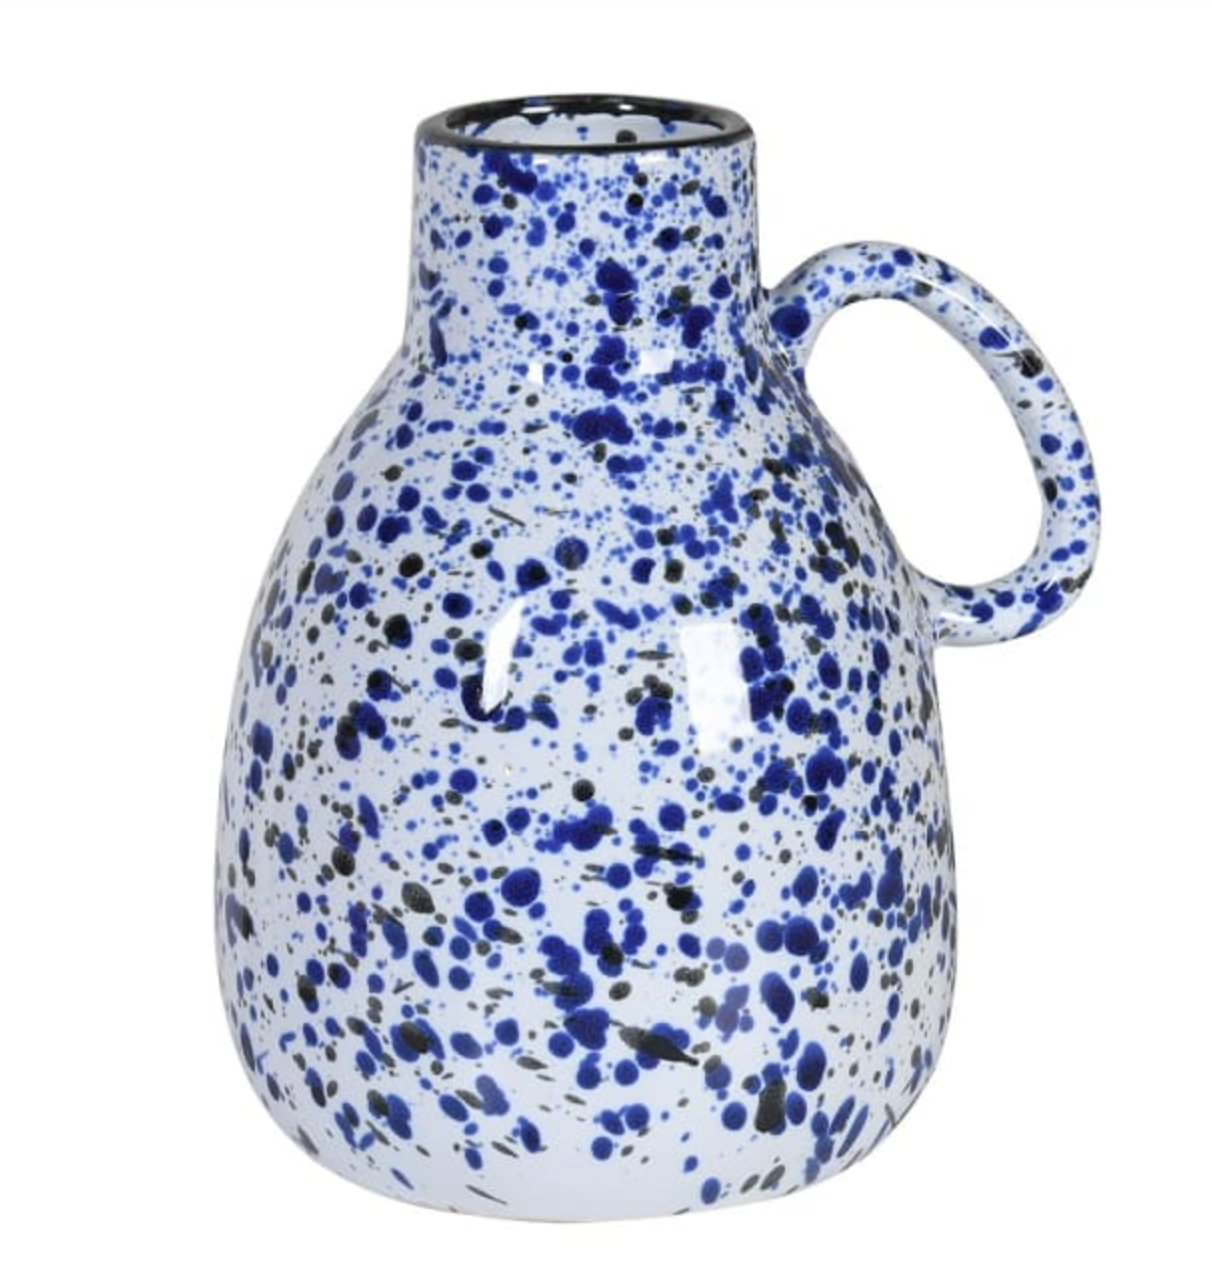 Blue and White Speckled Handled Vase